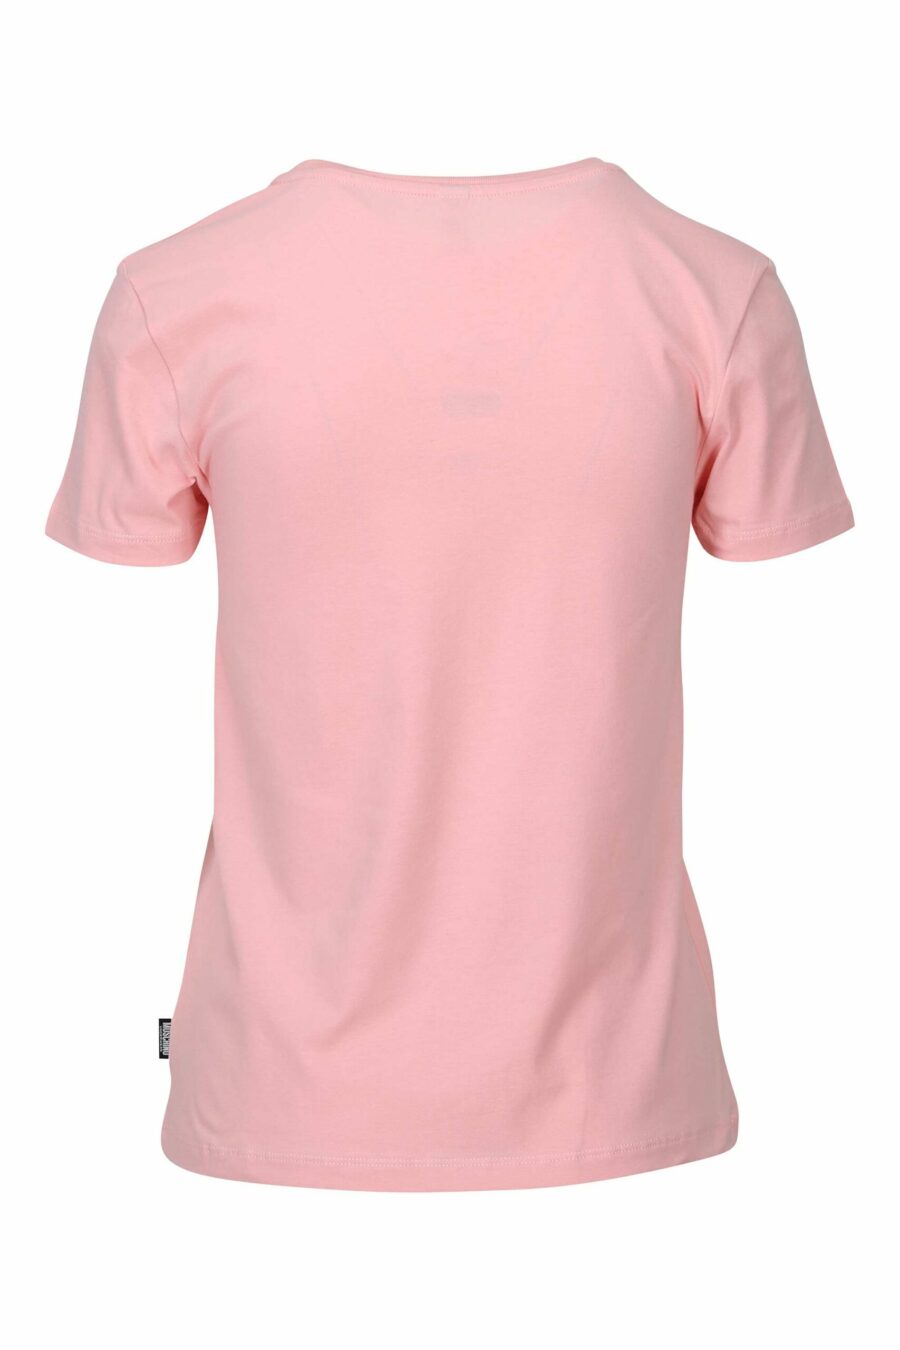 Camiseta rosa con logo parche oso "underbear" - 667113034546 1 scaled